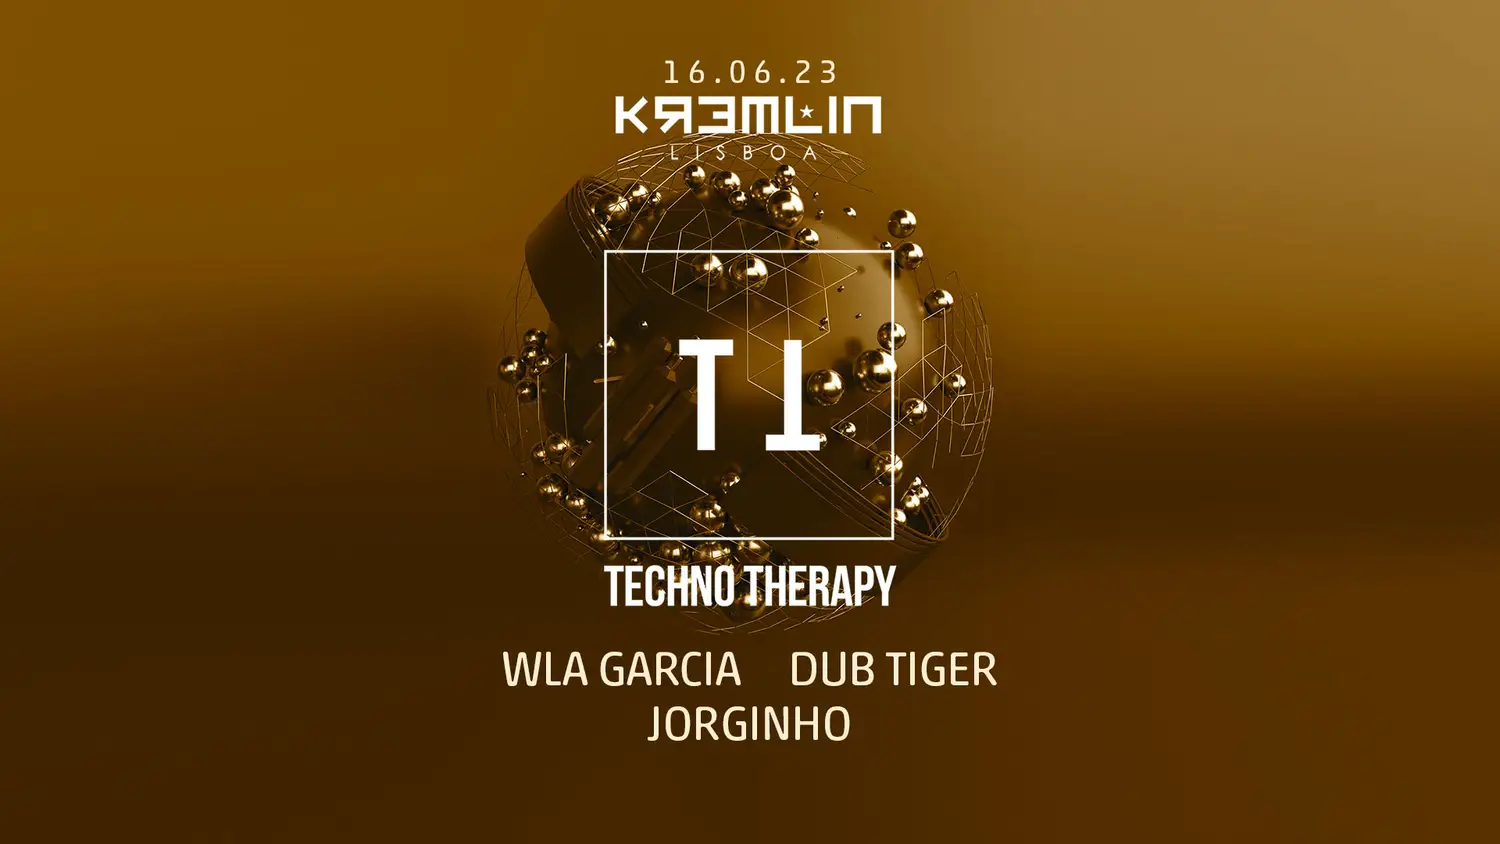 Techno Therapy Wla Garcia, Jorginho — hosted by Dub Tiger